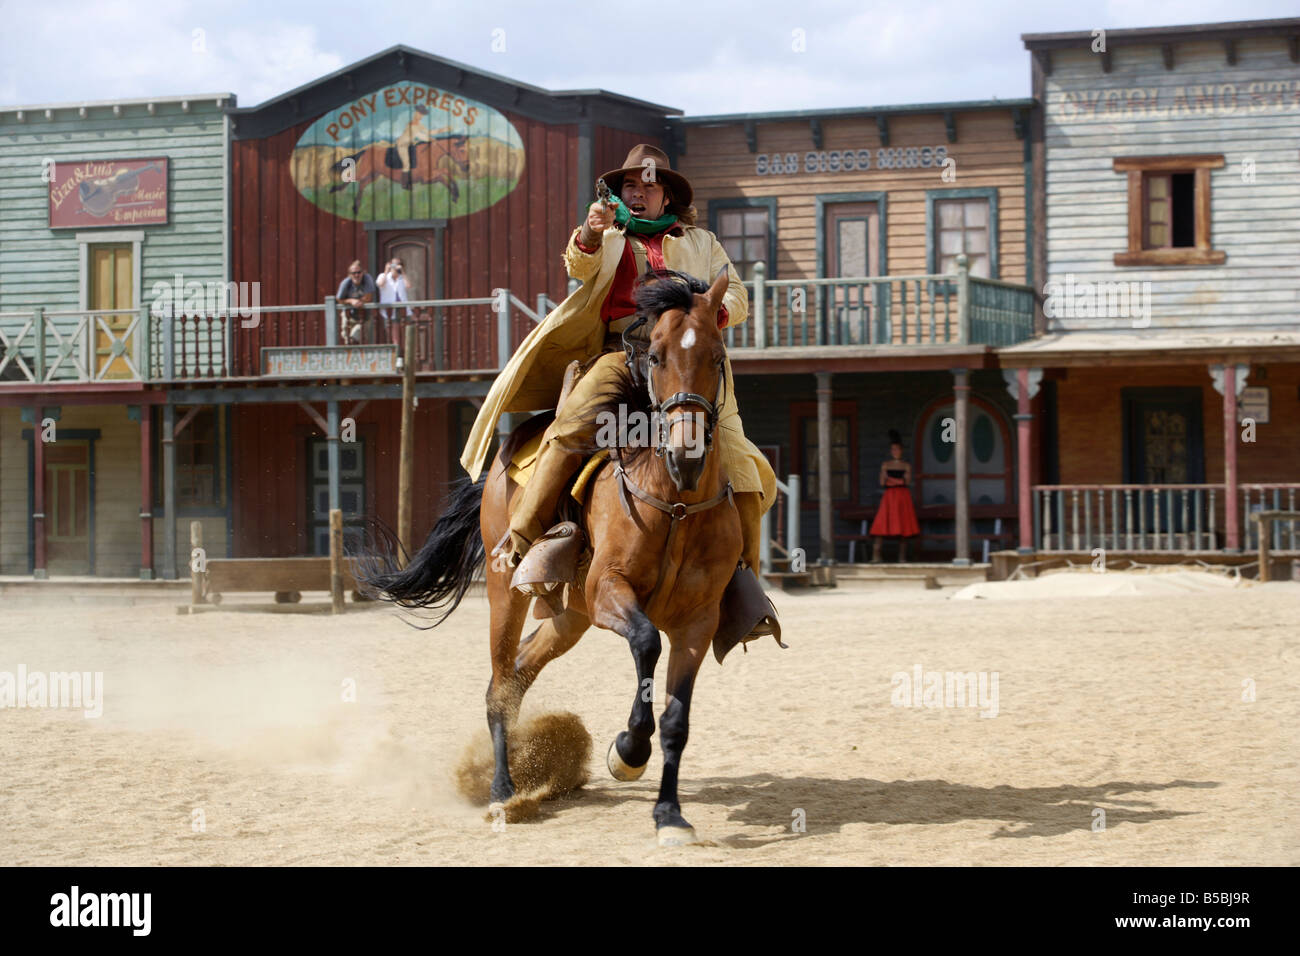 Cowboy shootout at Spaghetti Western de film, Oasys, mini-Hollywood, Tabernas, Almeria, Espagne Banque D'Images